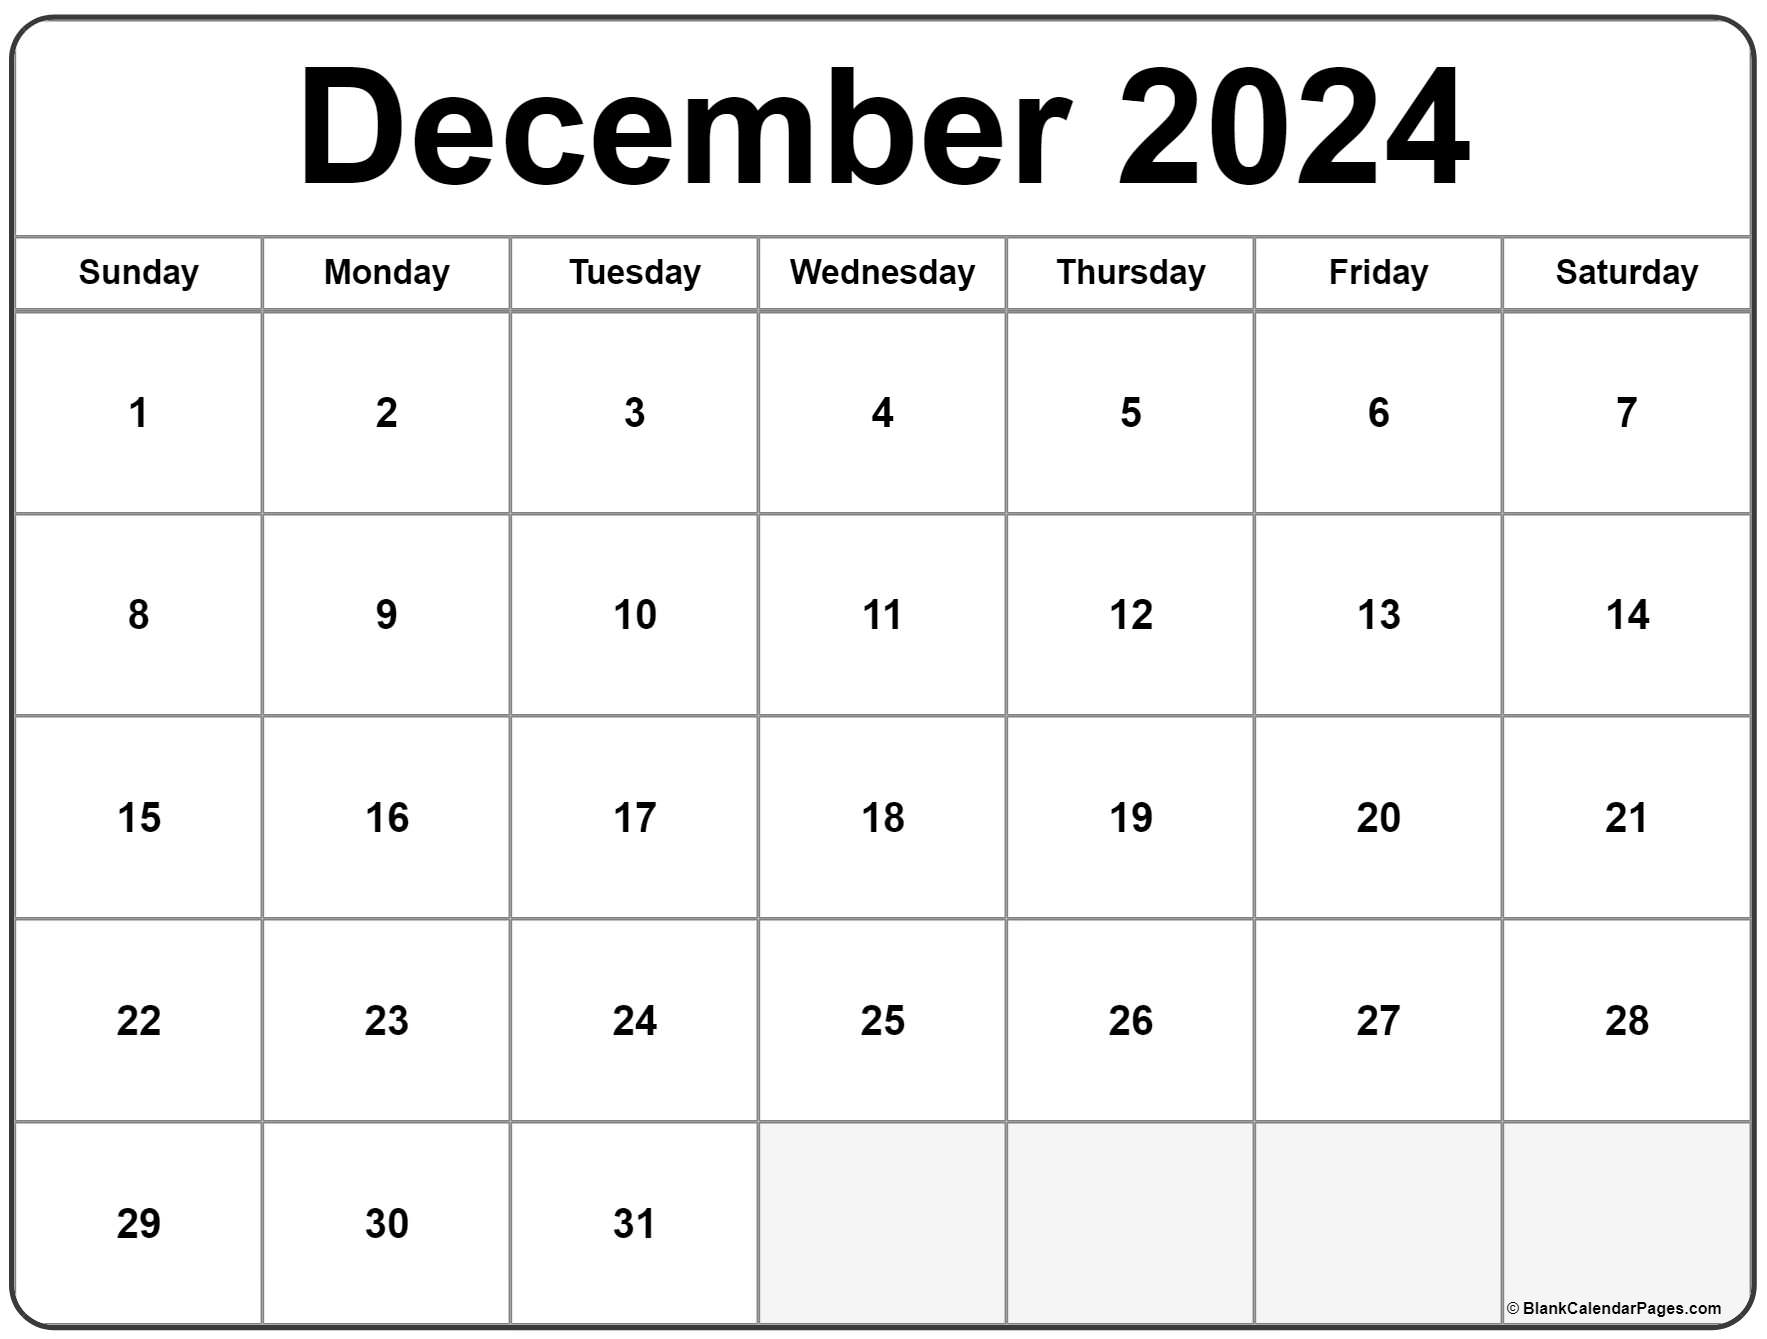 December 2022 calendar free printable calendar